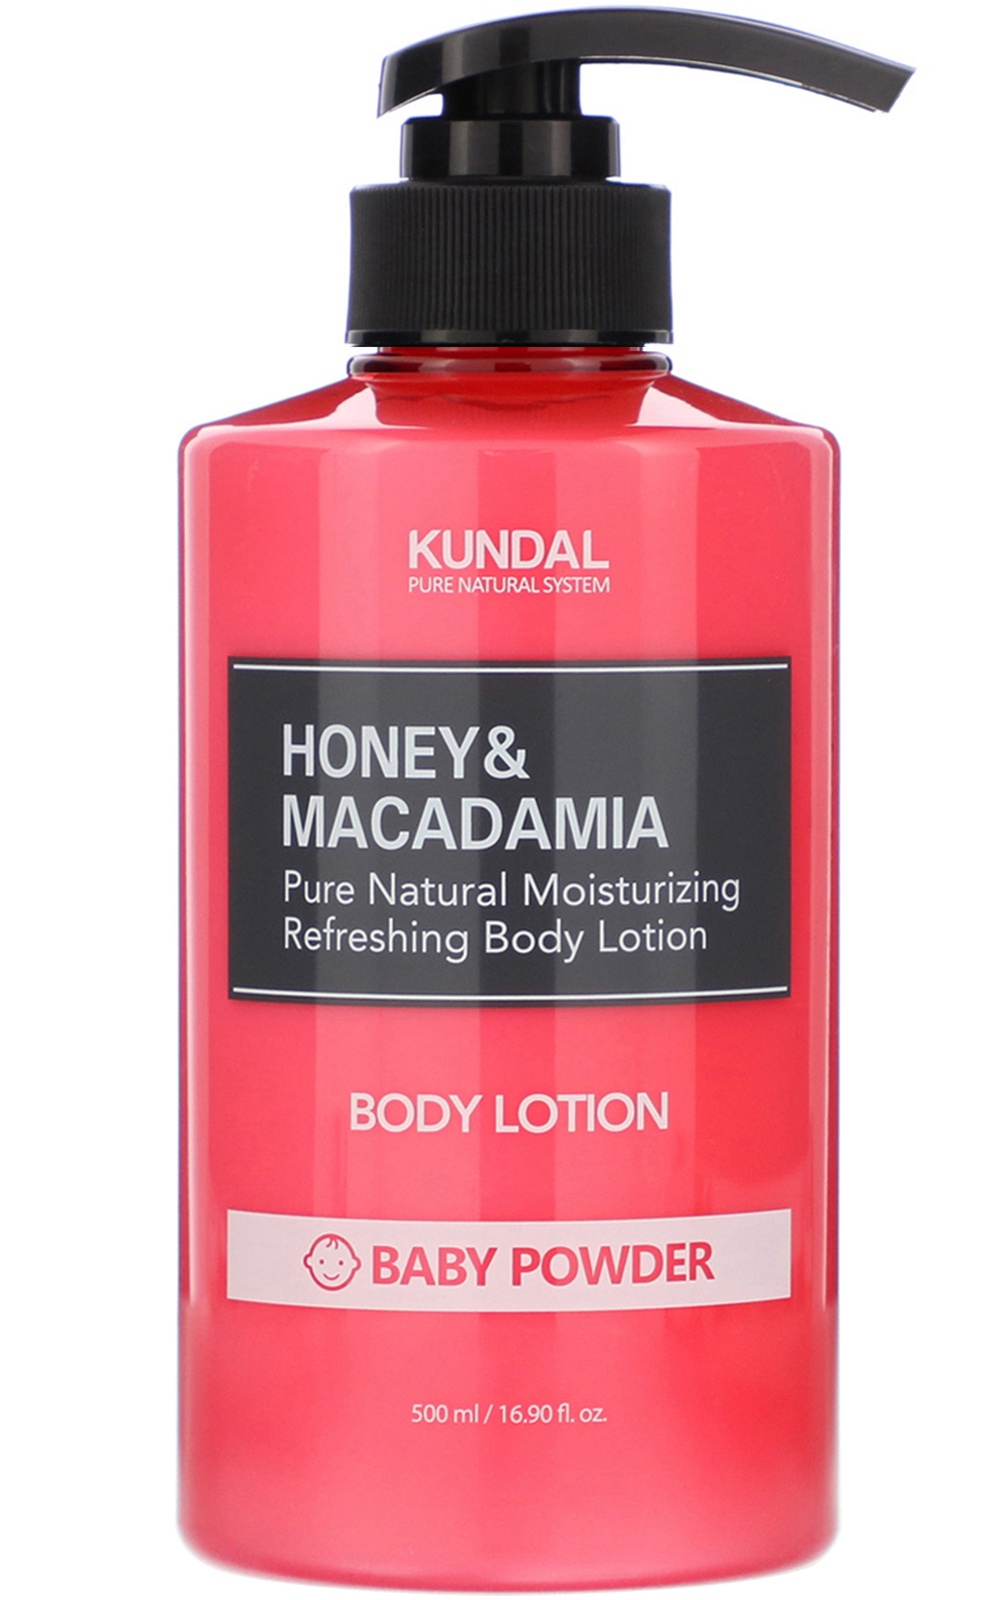 Kundal Honey & Macadamia Body Lotion Baby Powder